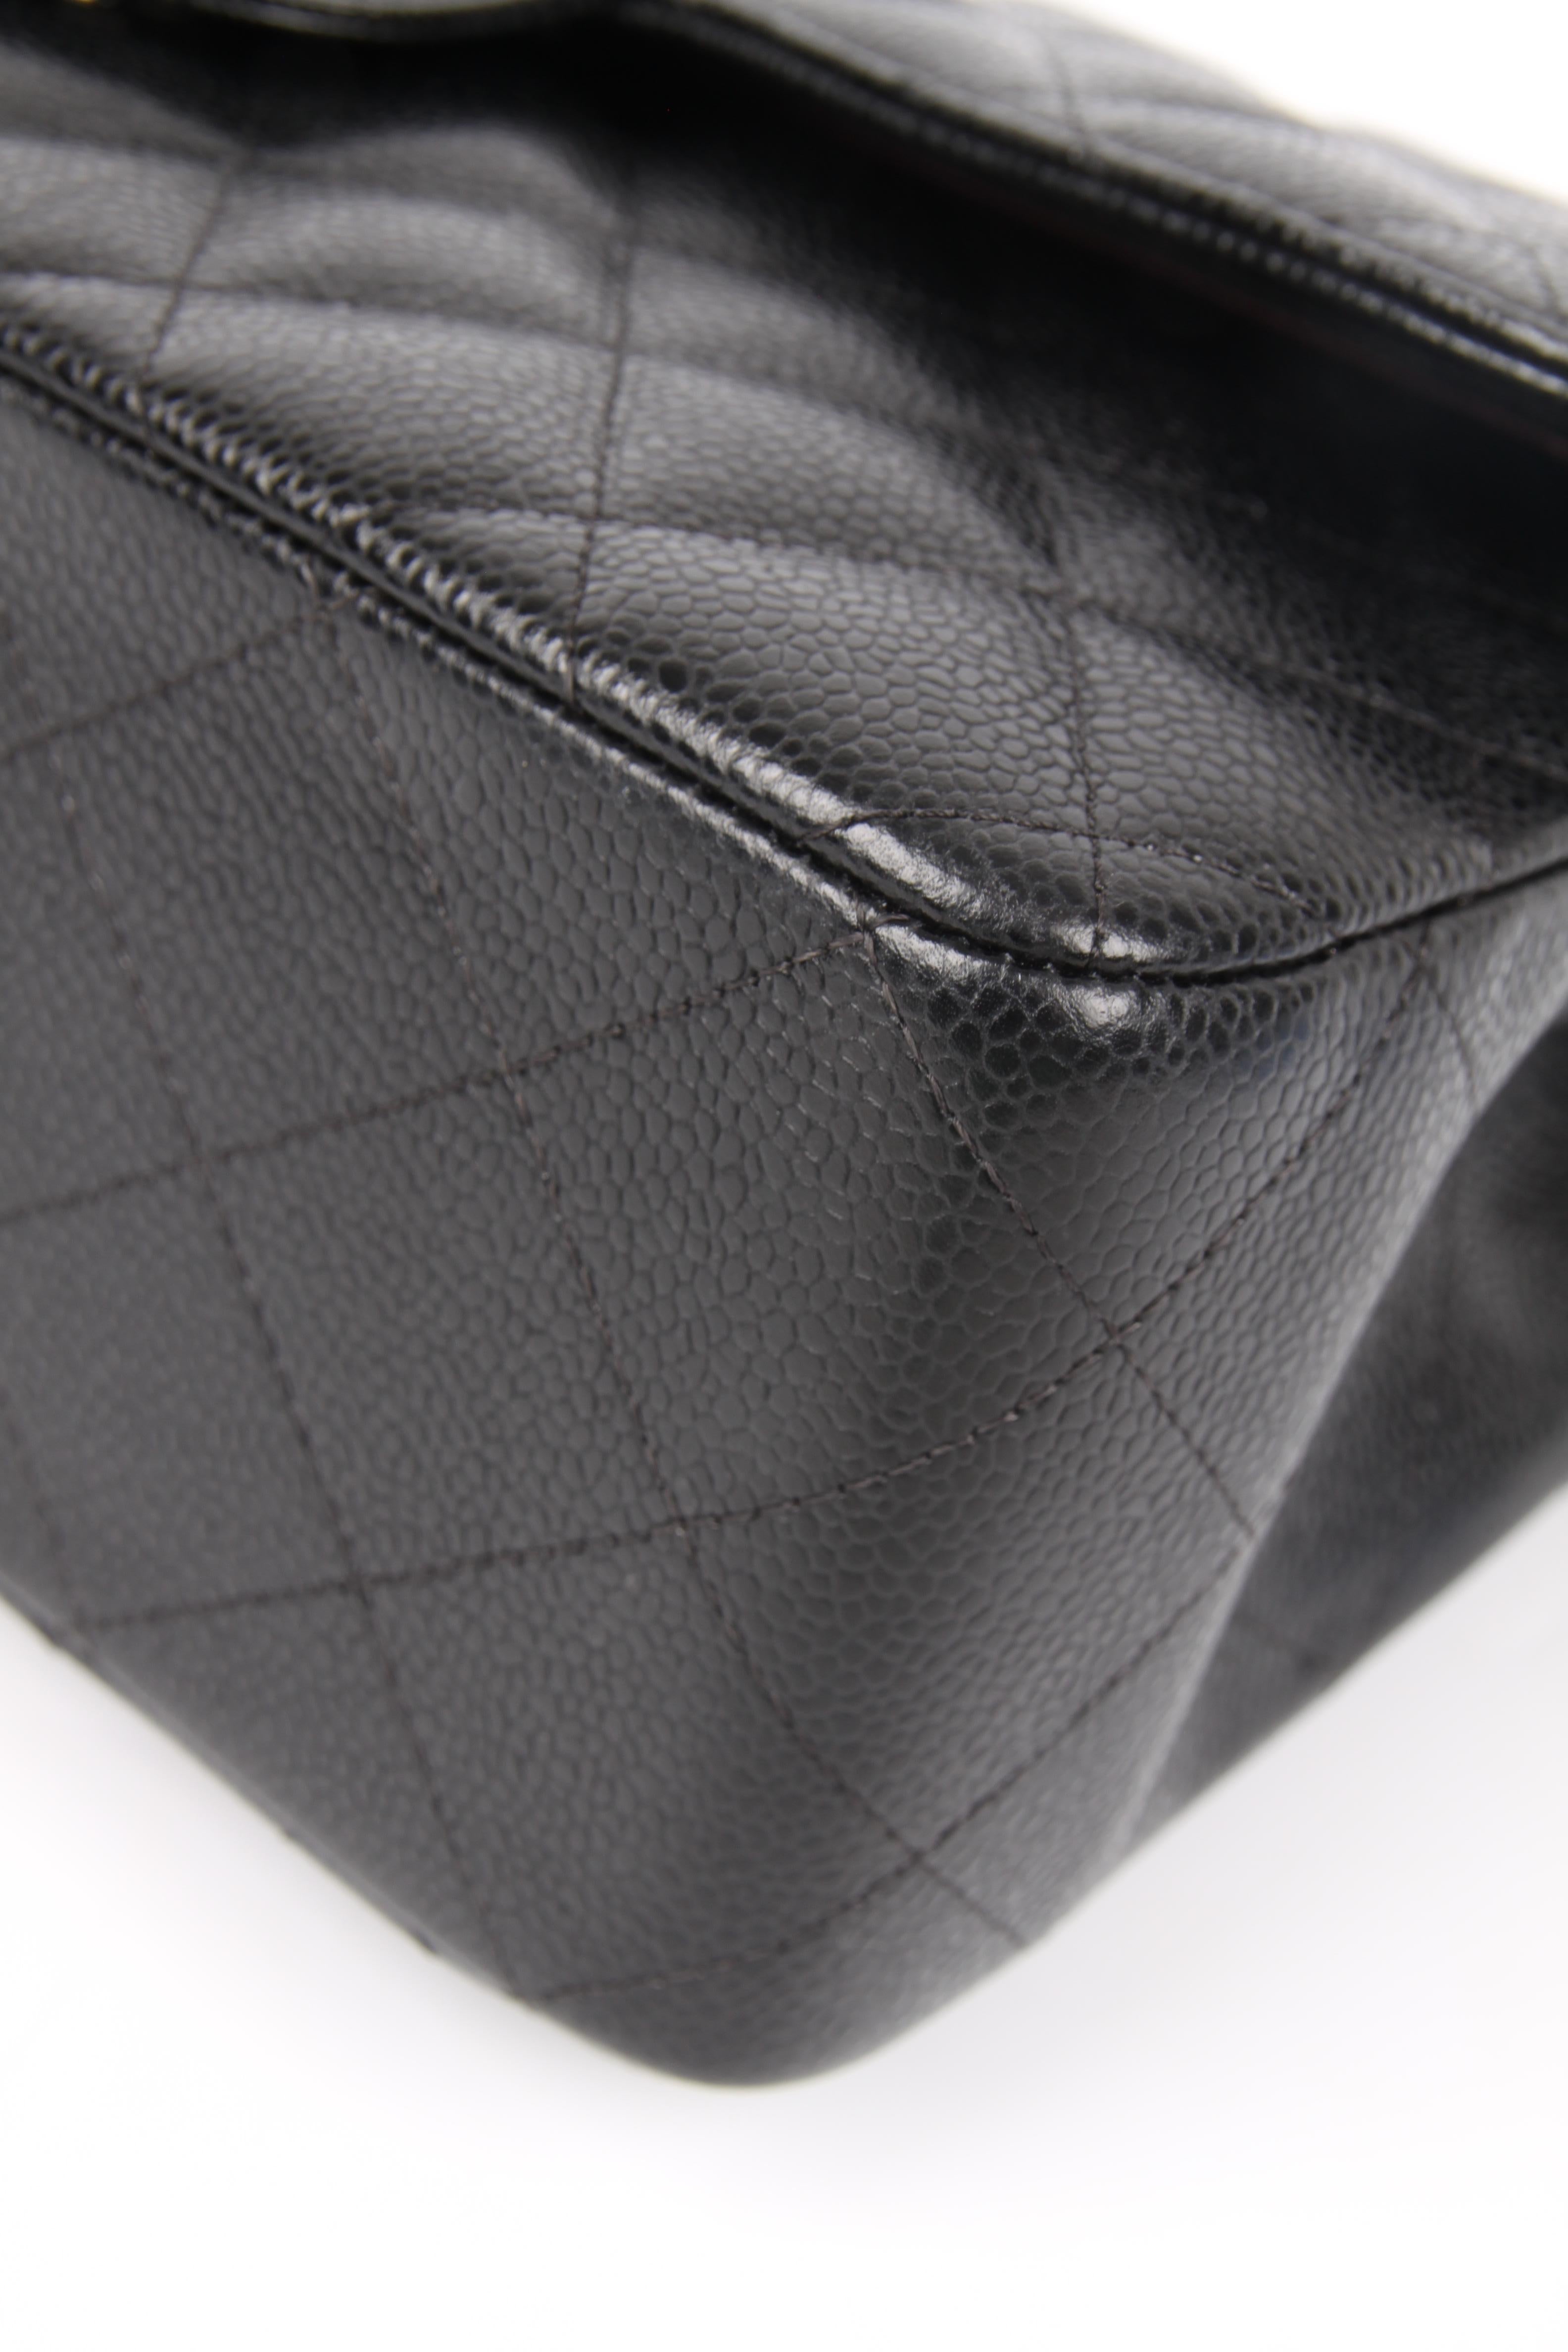 Chanel 2.55 Timeless Jumbo Double Flap Bag - black caviar leather/silver 2